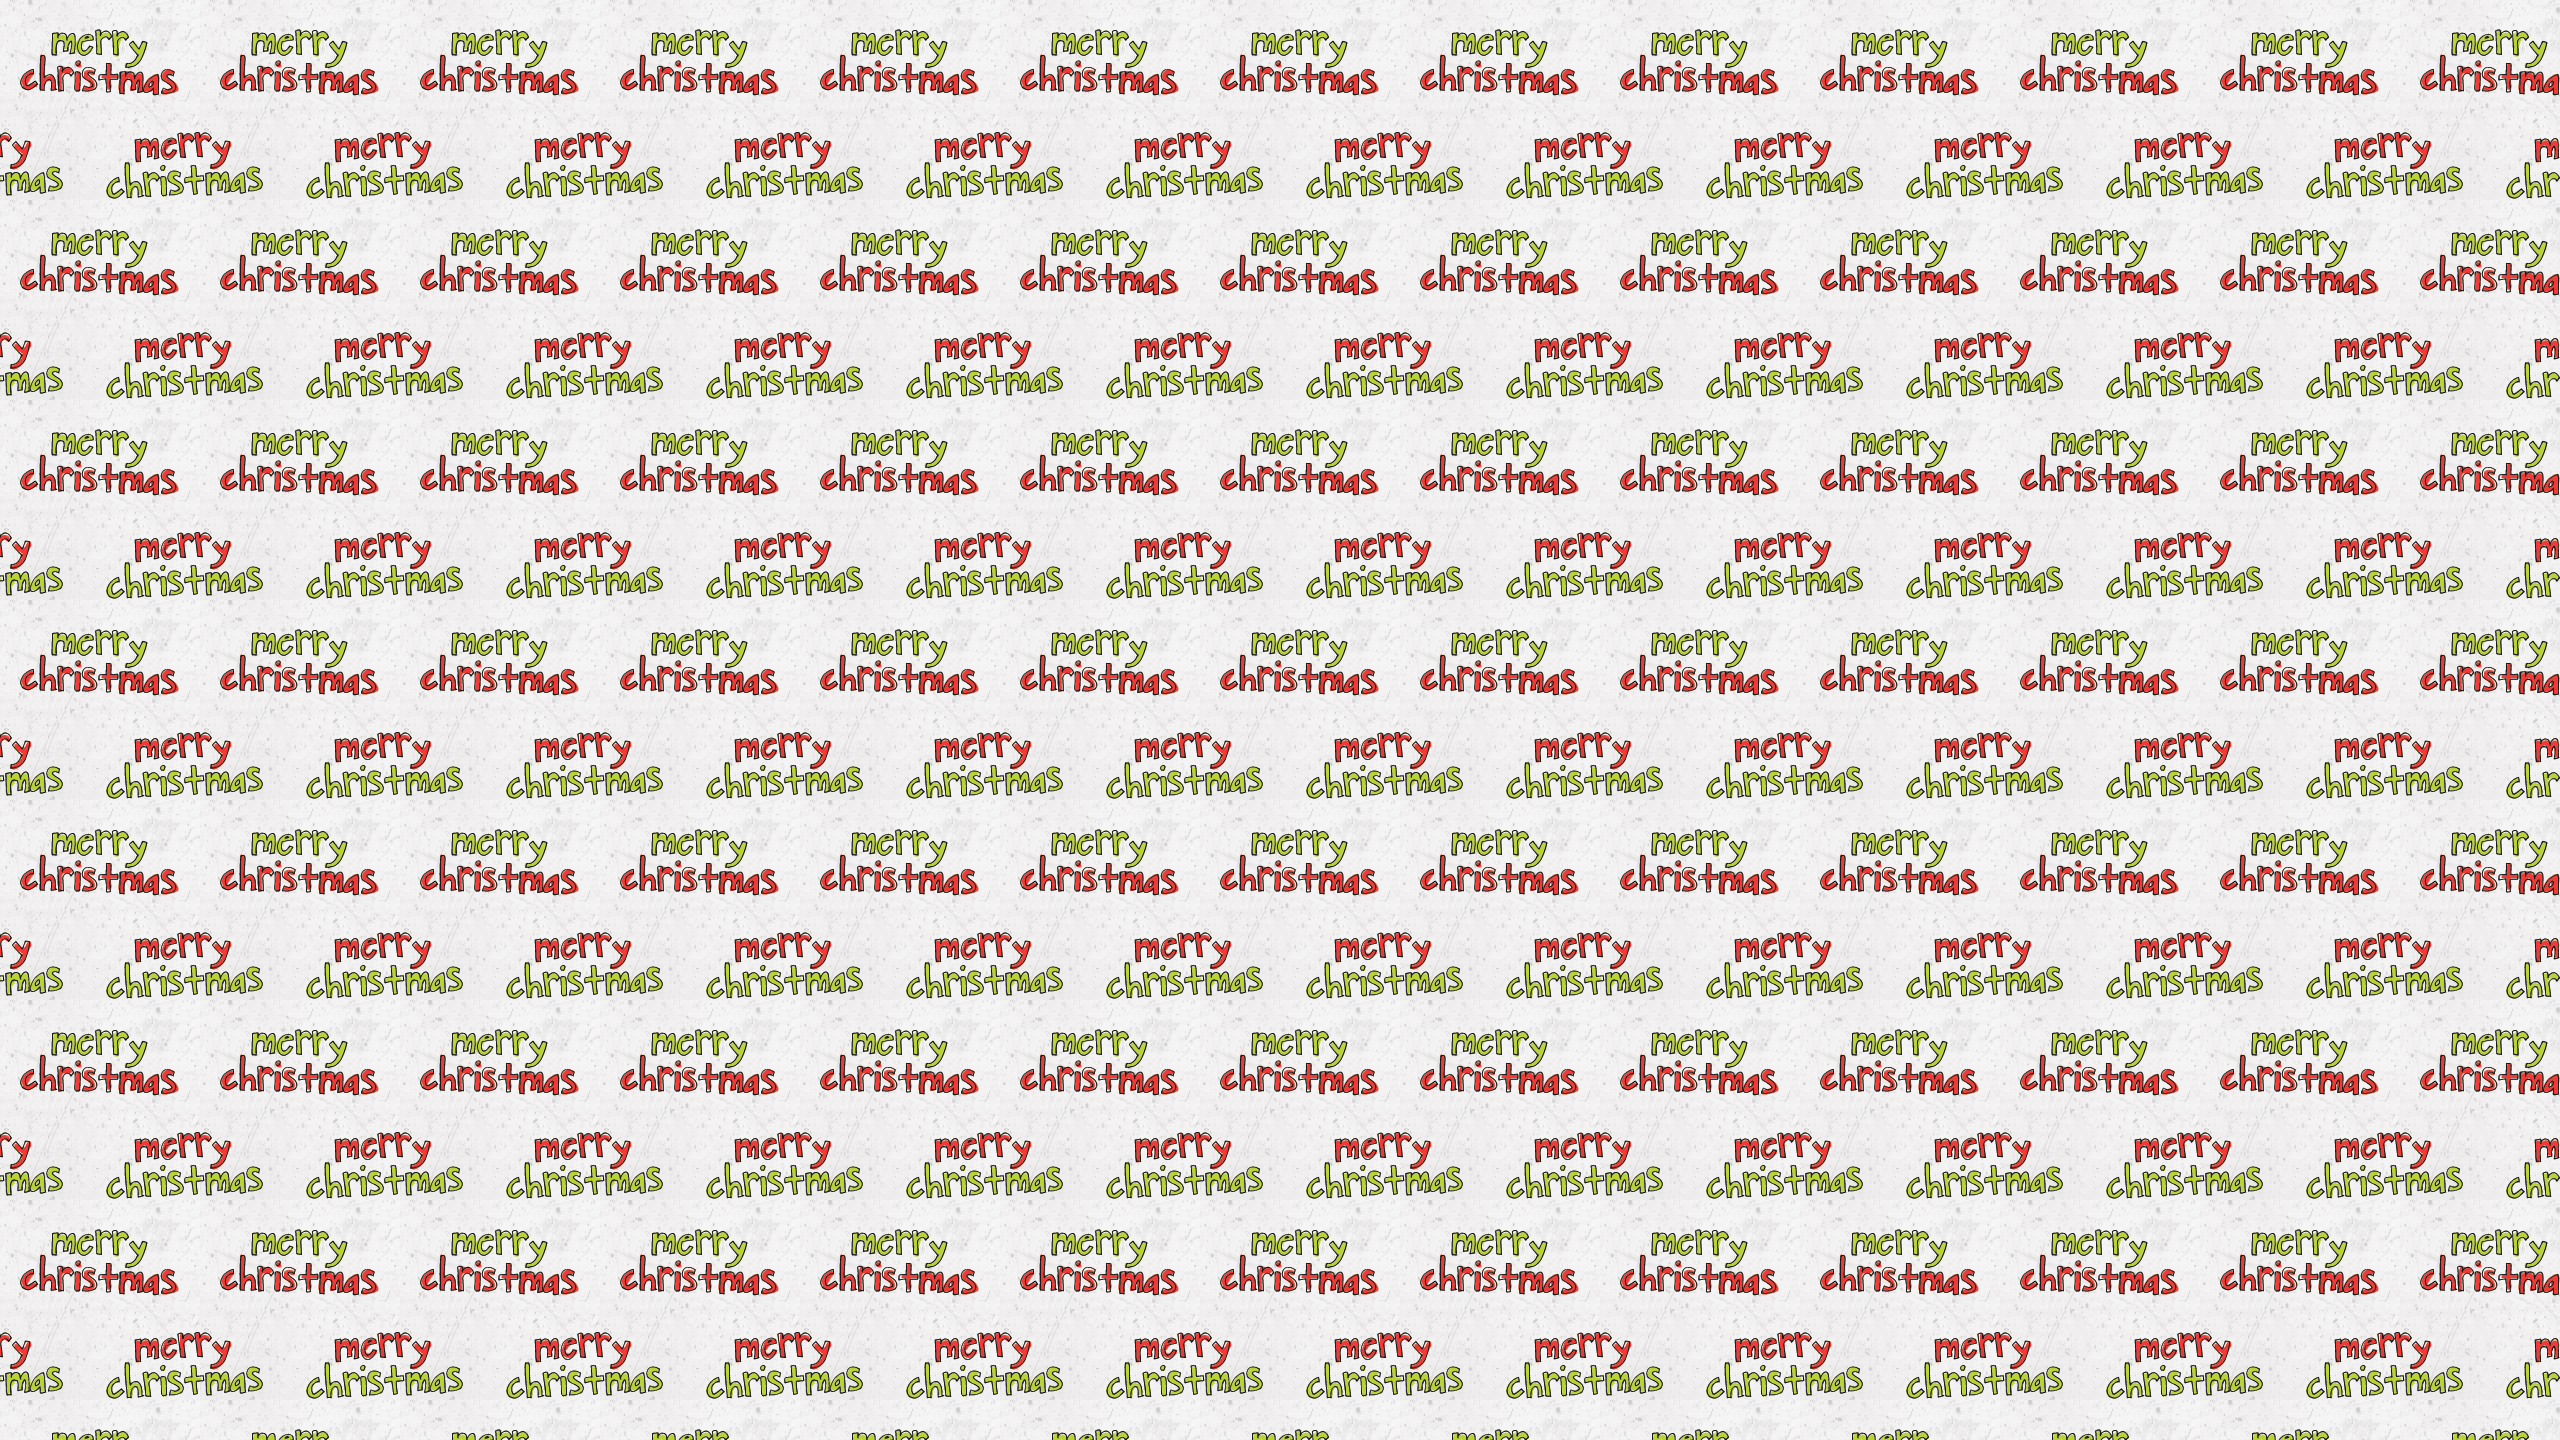 Merry Christmas Words Desktop Wallpaper